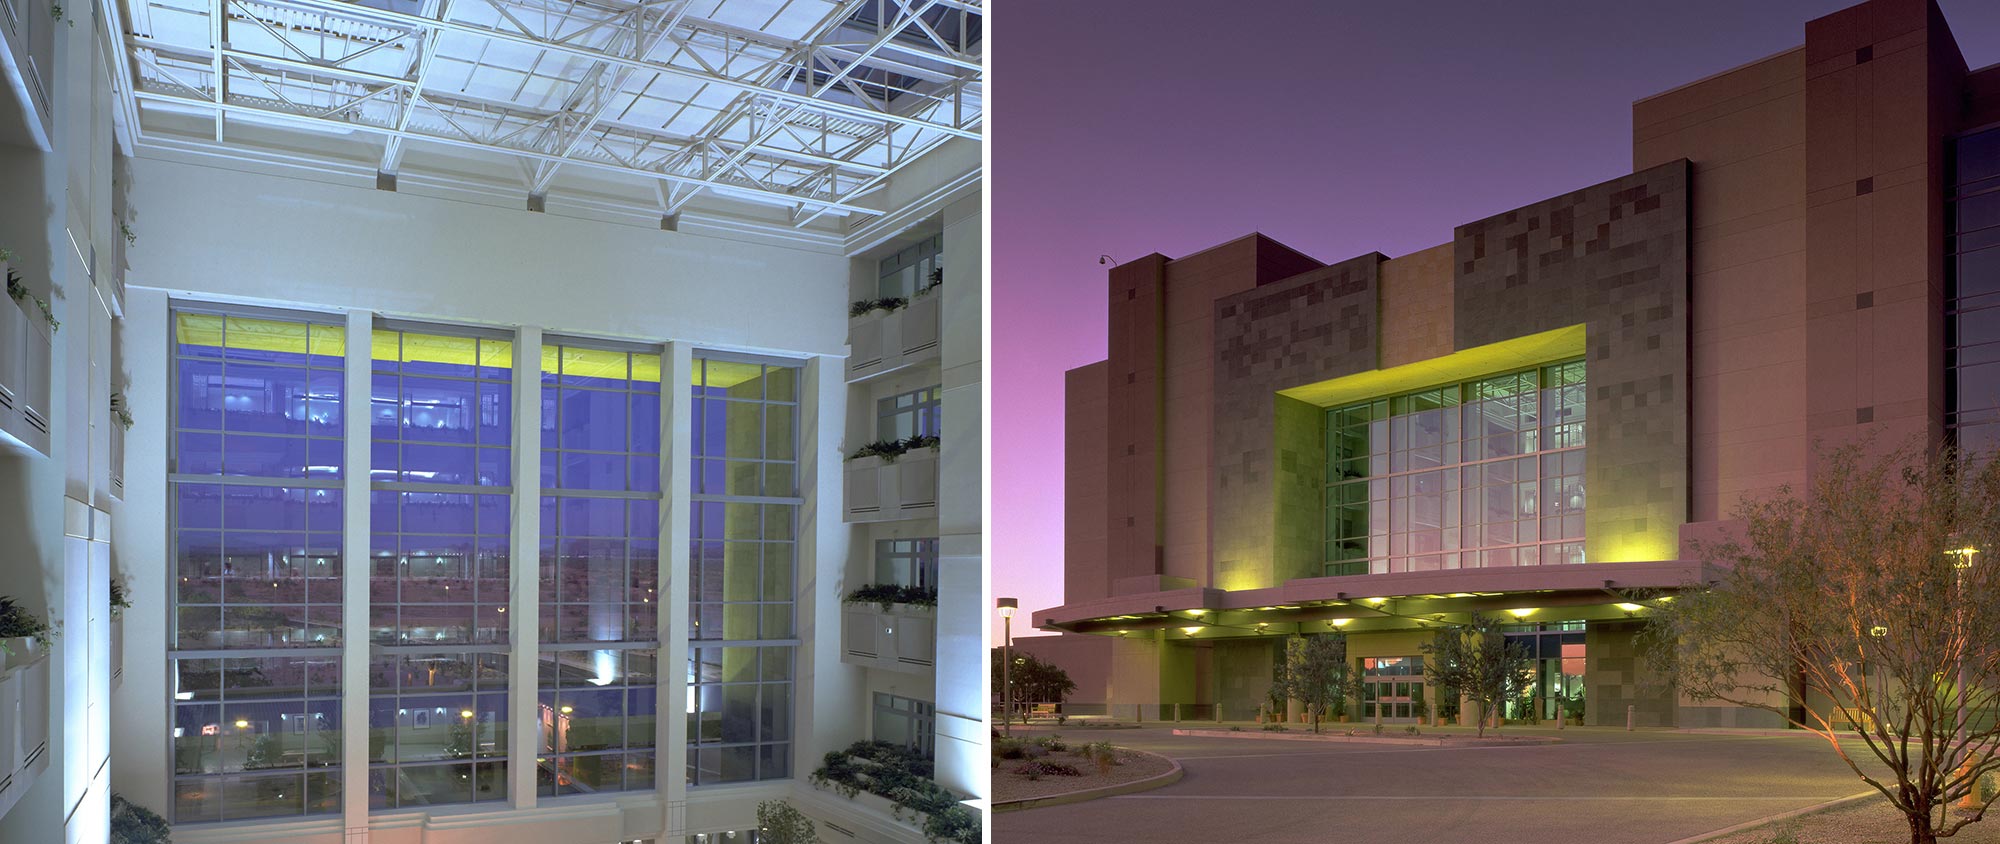 Mayo Clinic Hospital and Mayo Clinic Specialty Building